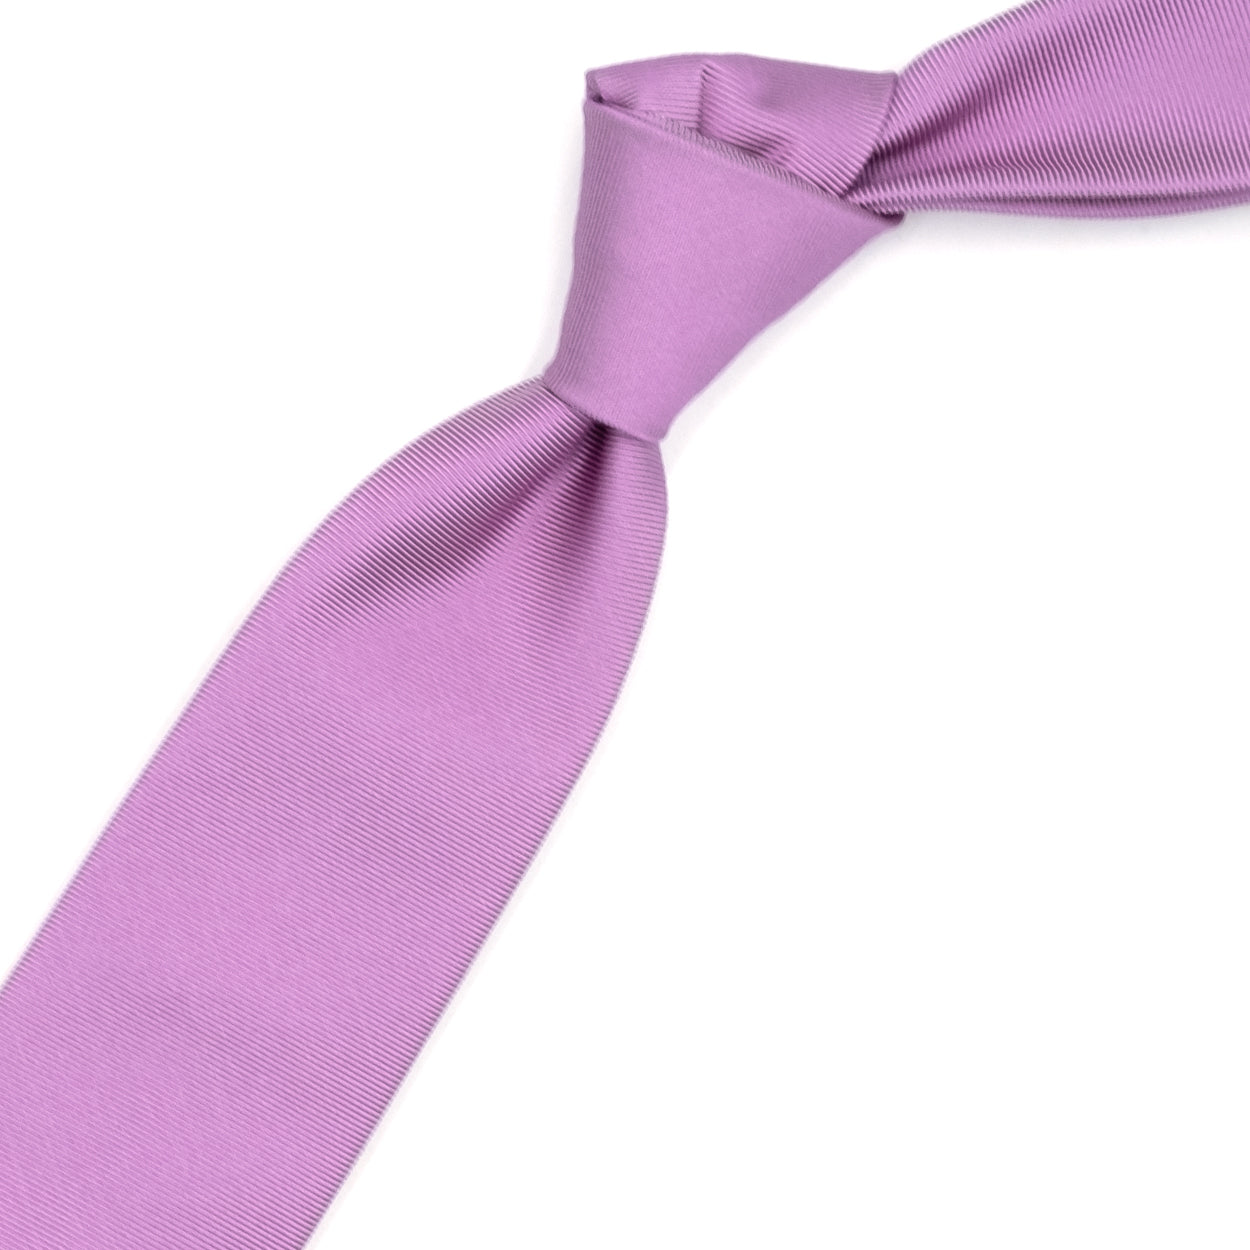 Solid pink tie